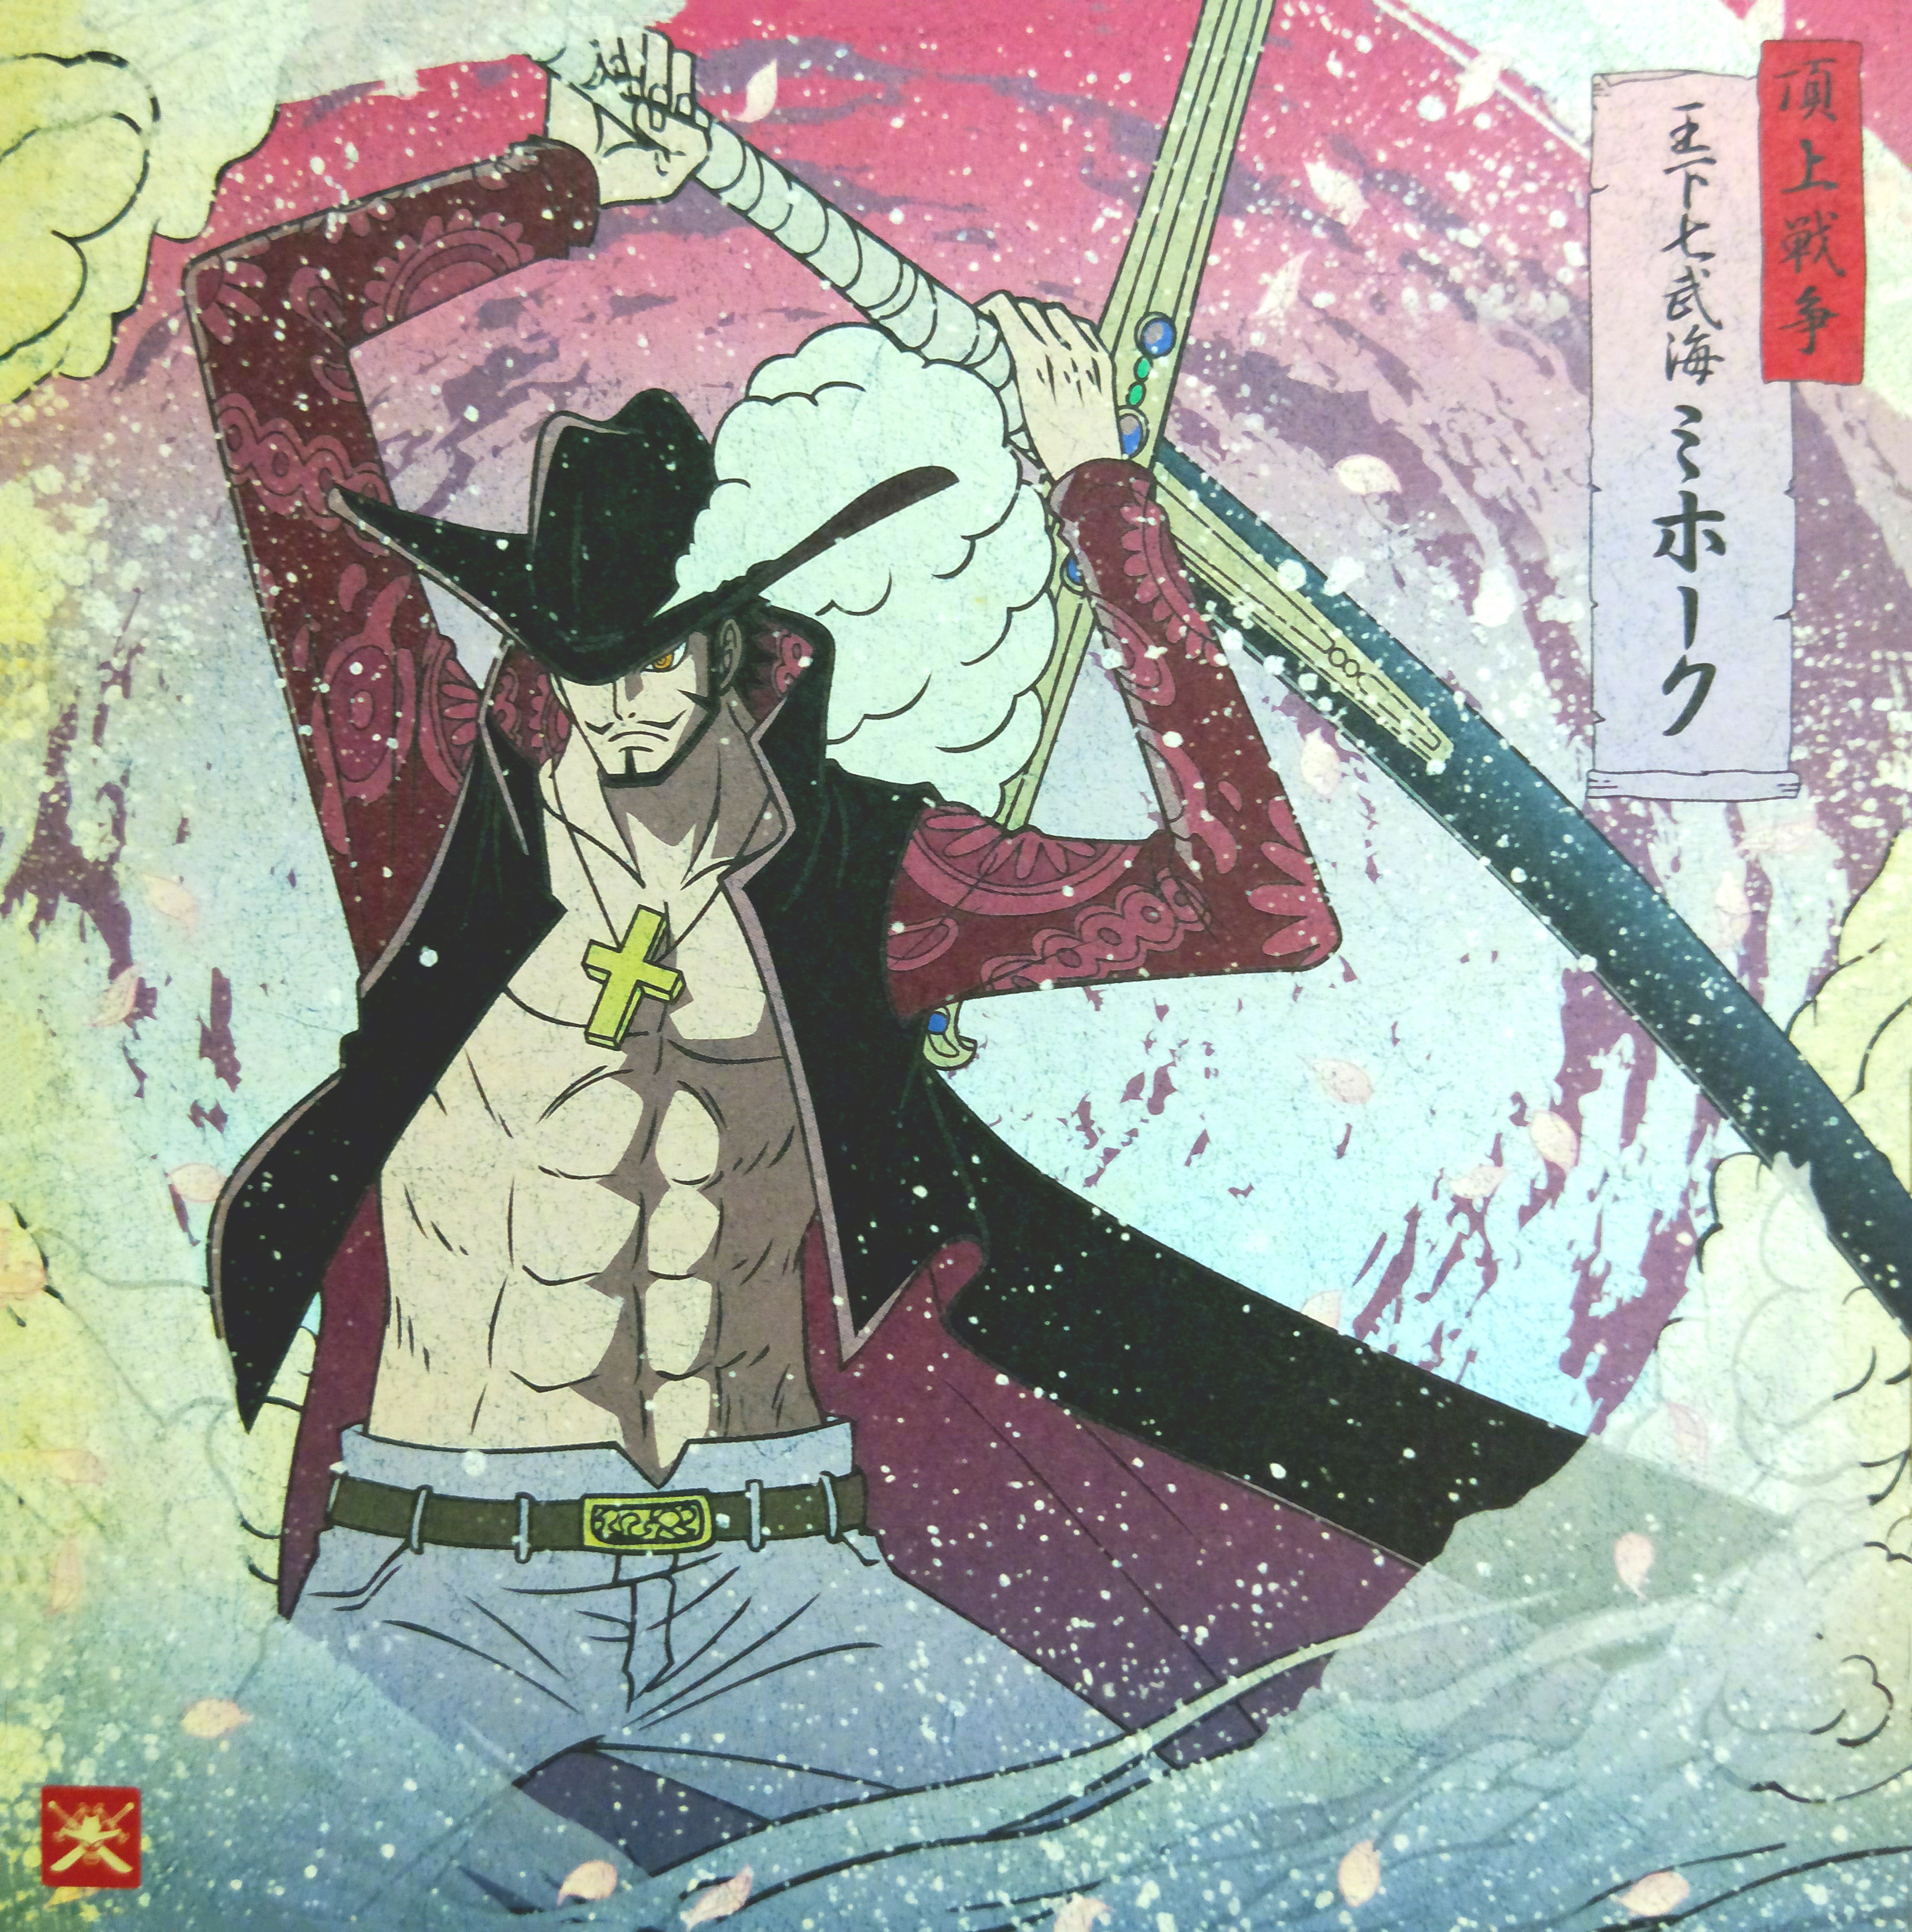 Anime 5984x6048 One Piece Dracule Mihawk anime men cross sword Japanese Japanese characters petals